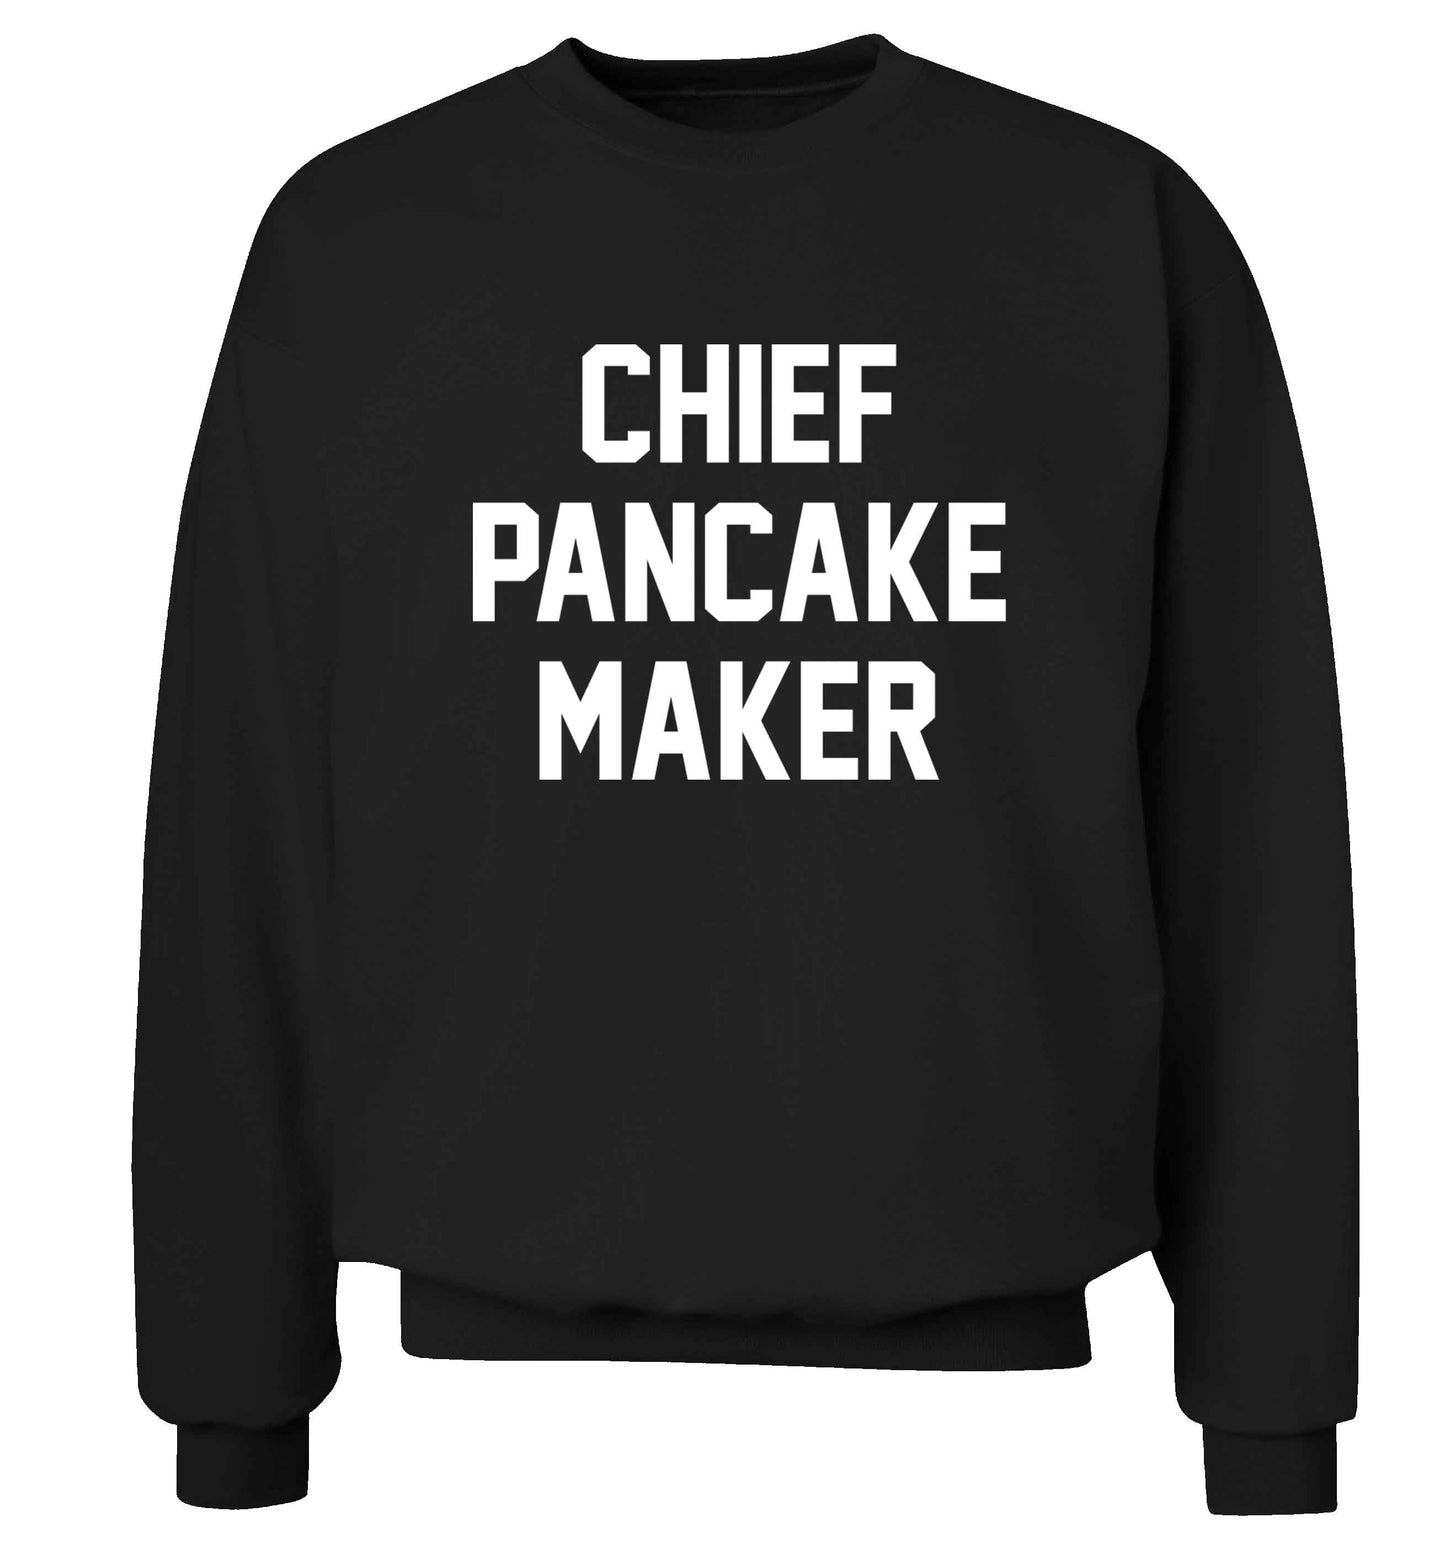 Chief pancake maker adult's unisex black sweater 2XL